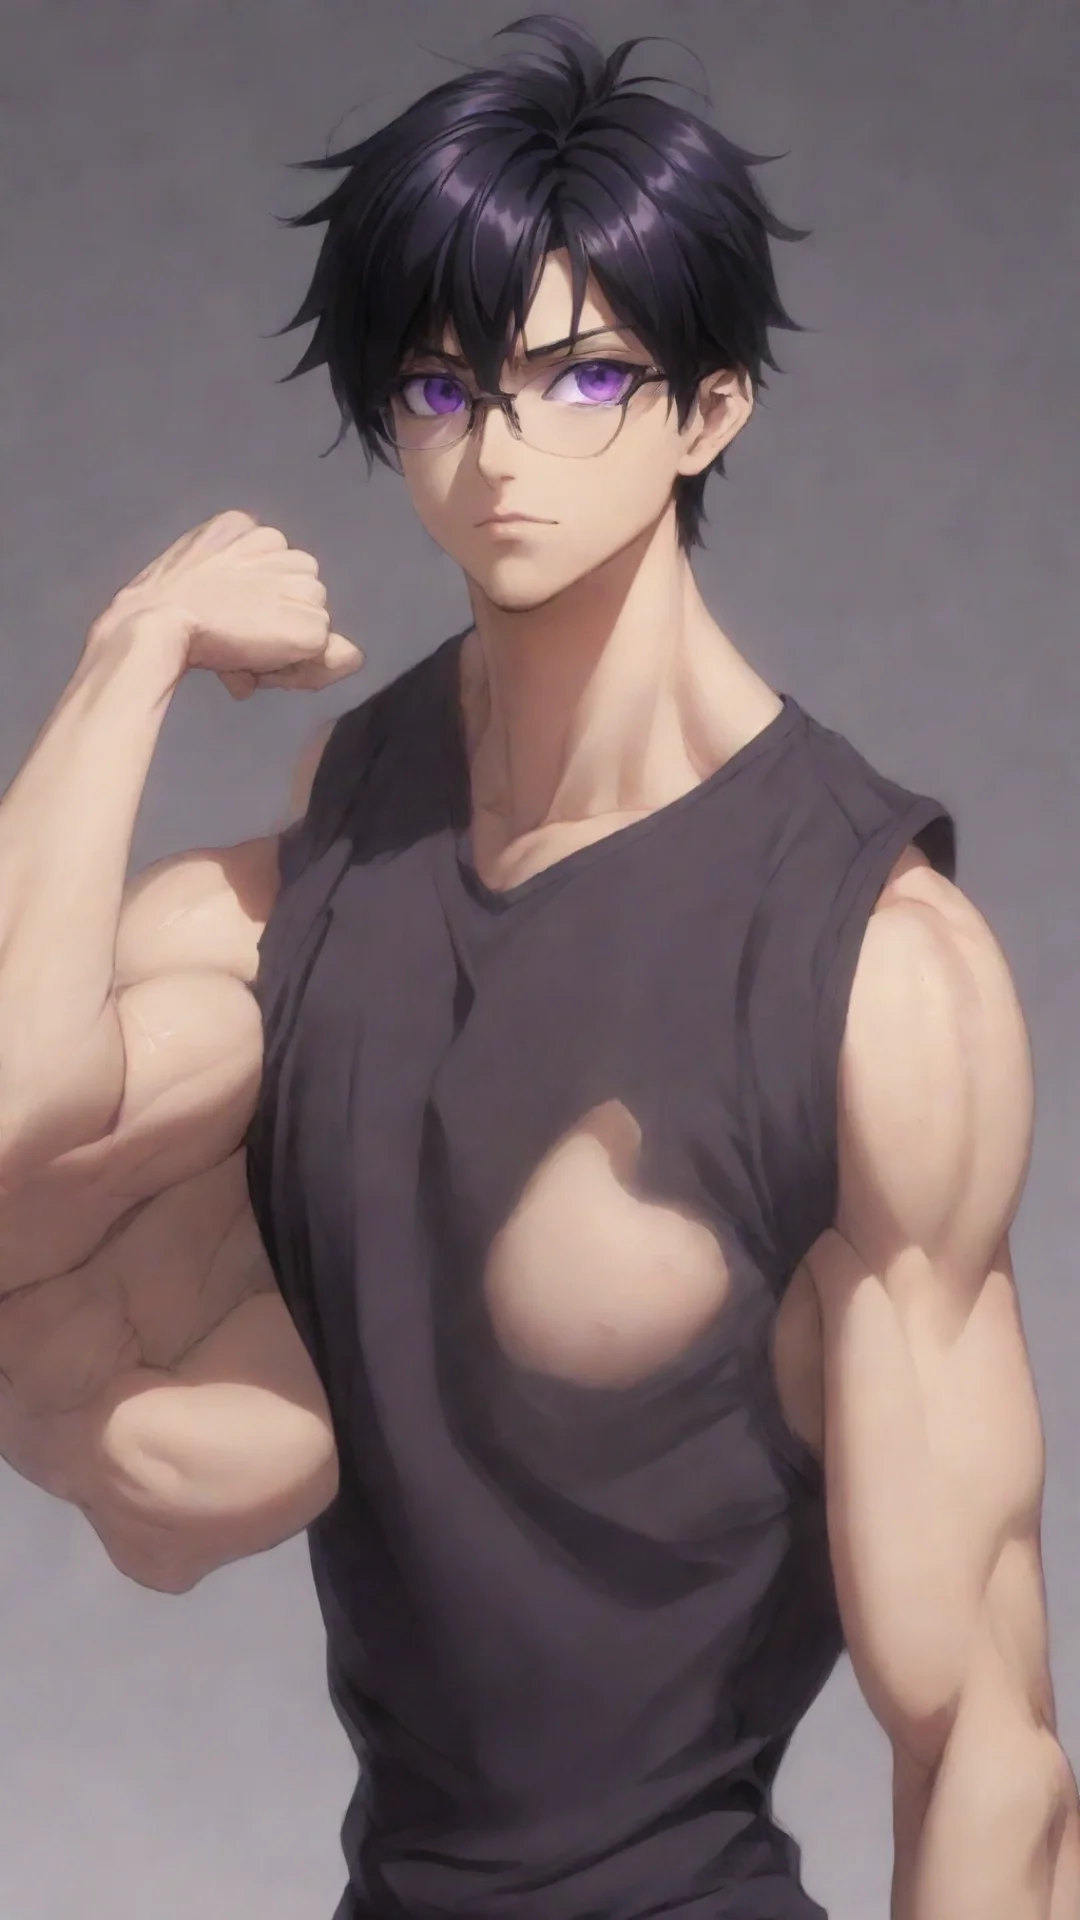 amazing anime boy black hair glasses purple eyes athletic biceps awesome portrait 2 tall